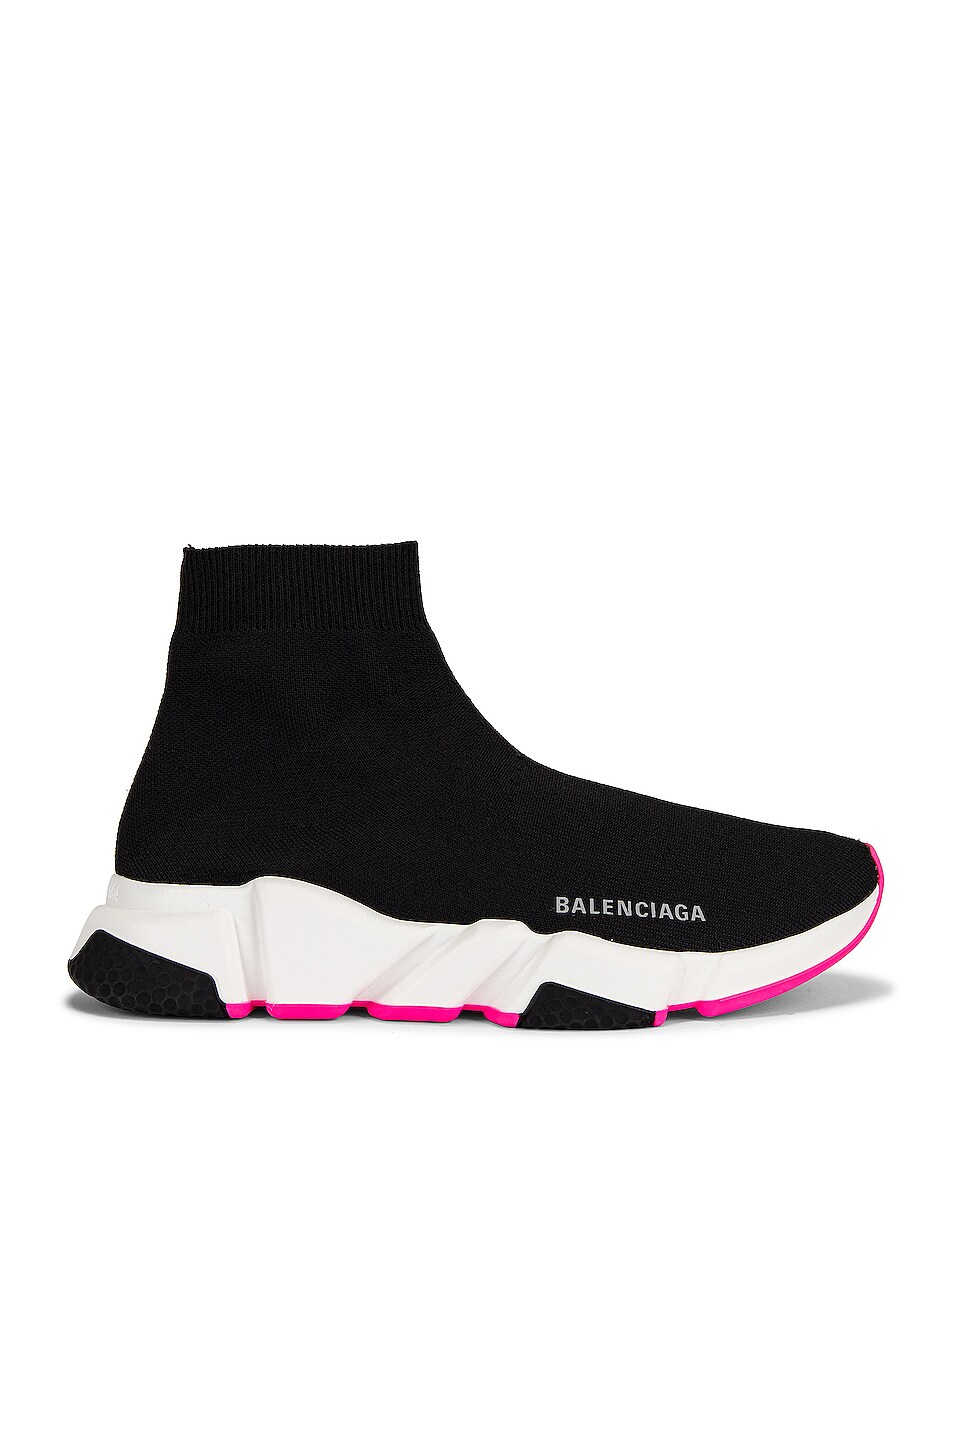 Image 1 of Balenciaga Speed Lt Sneakers in Black & White & Fuchsia